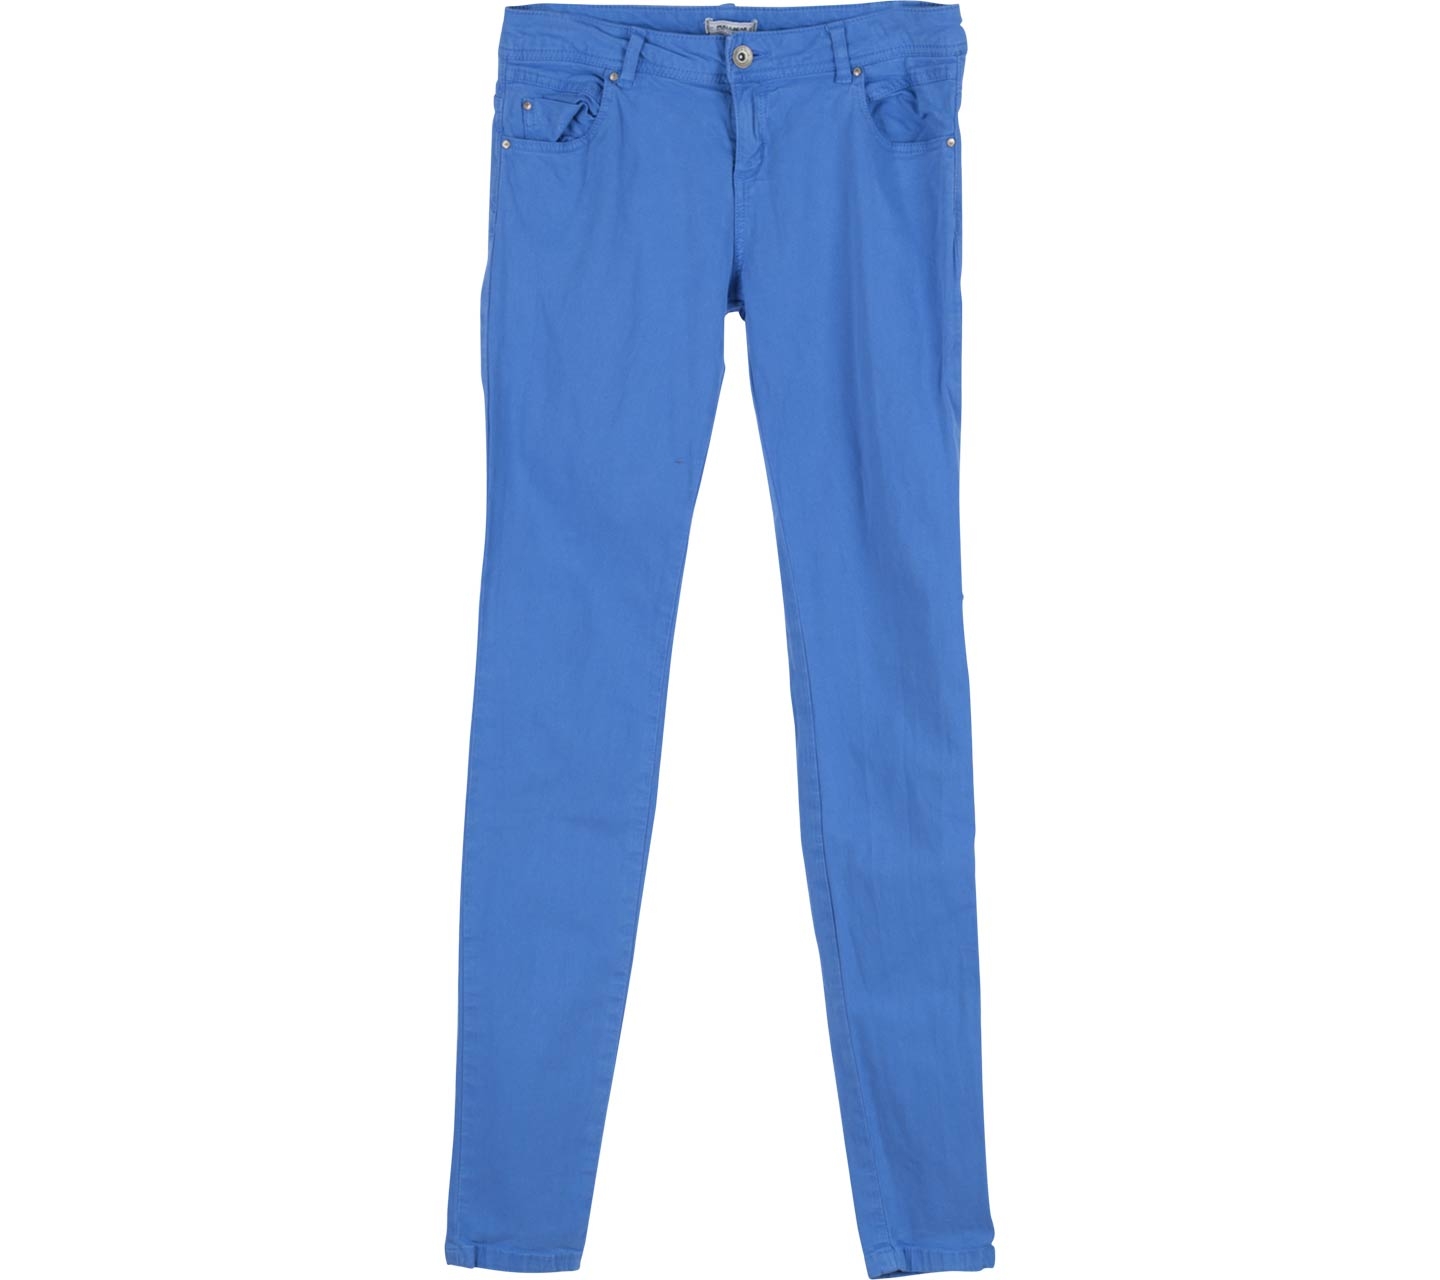 Pull & Bear Blue Skinny Jeans Pants